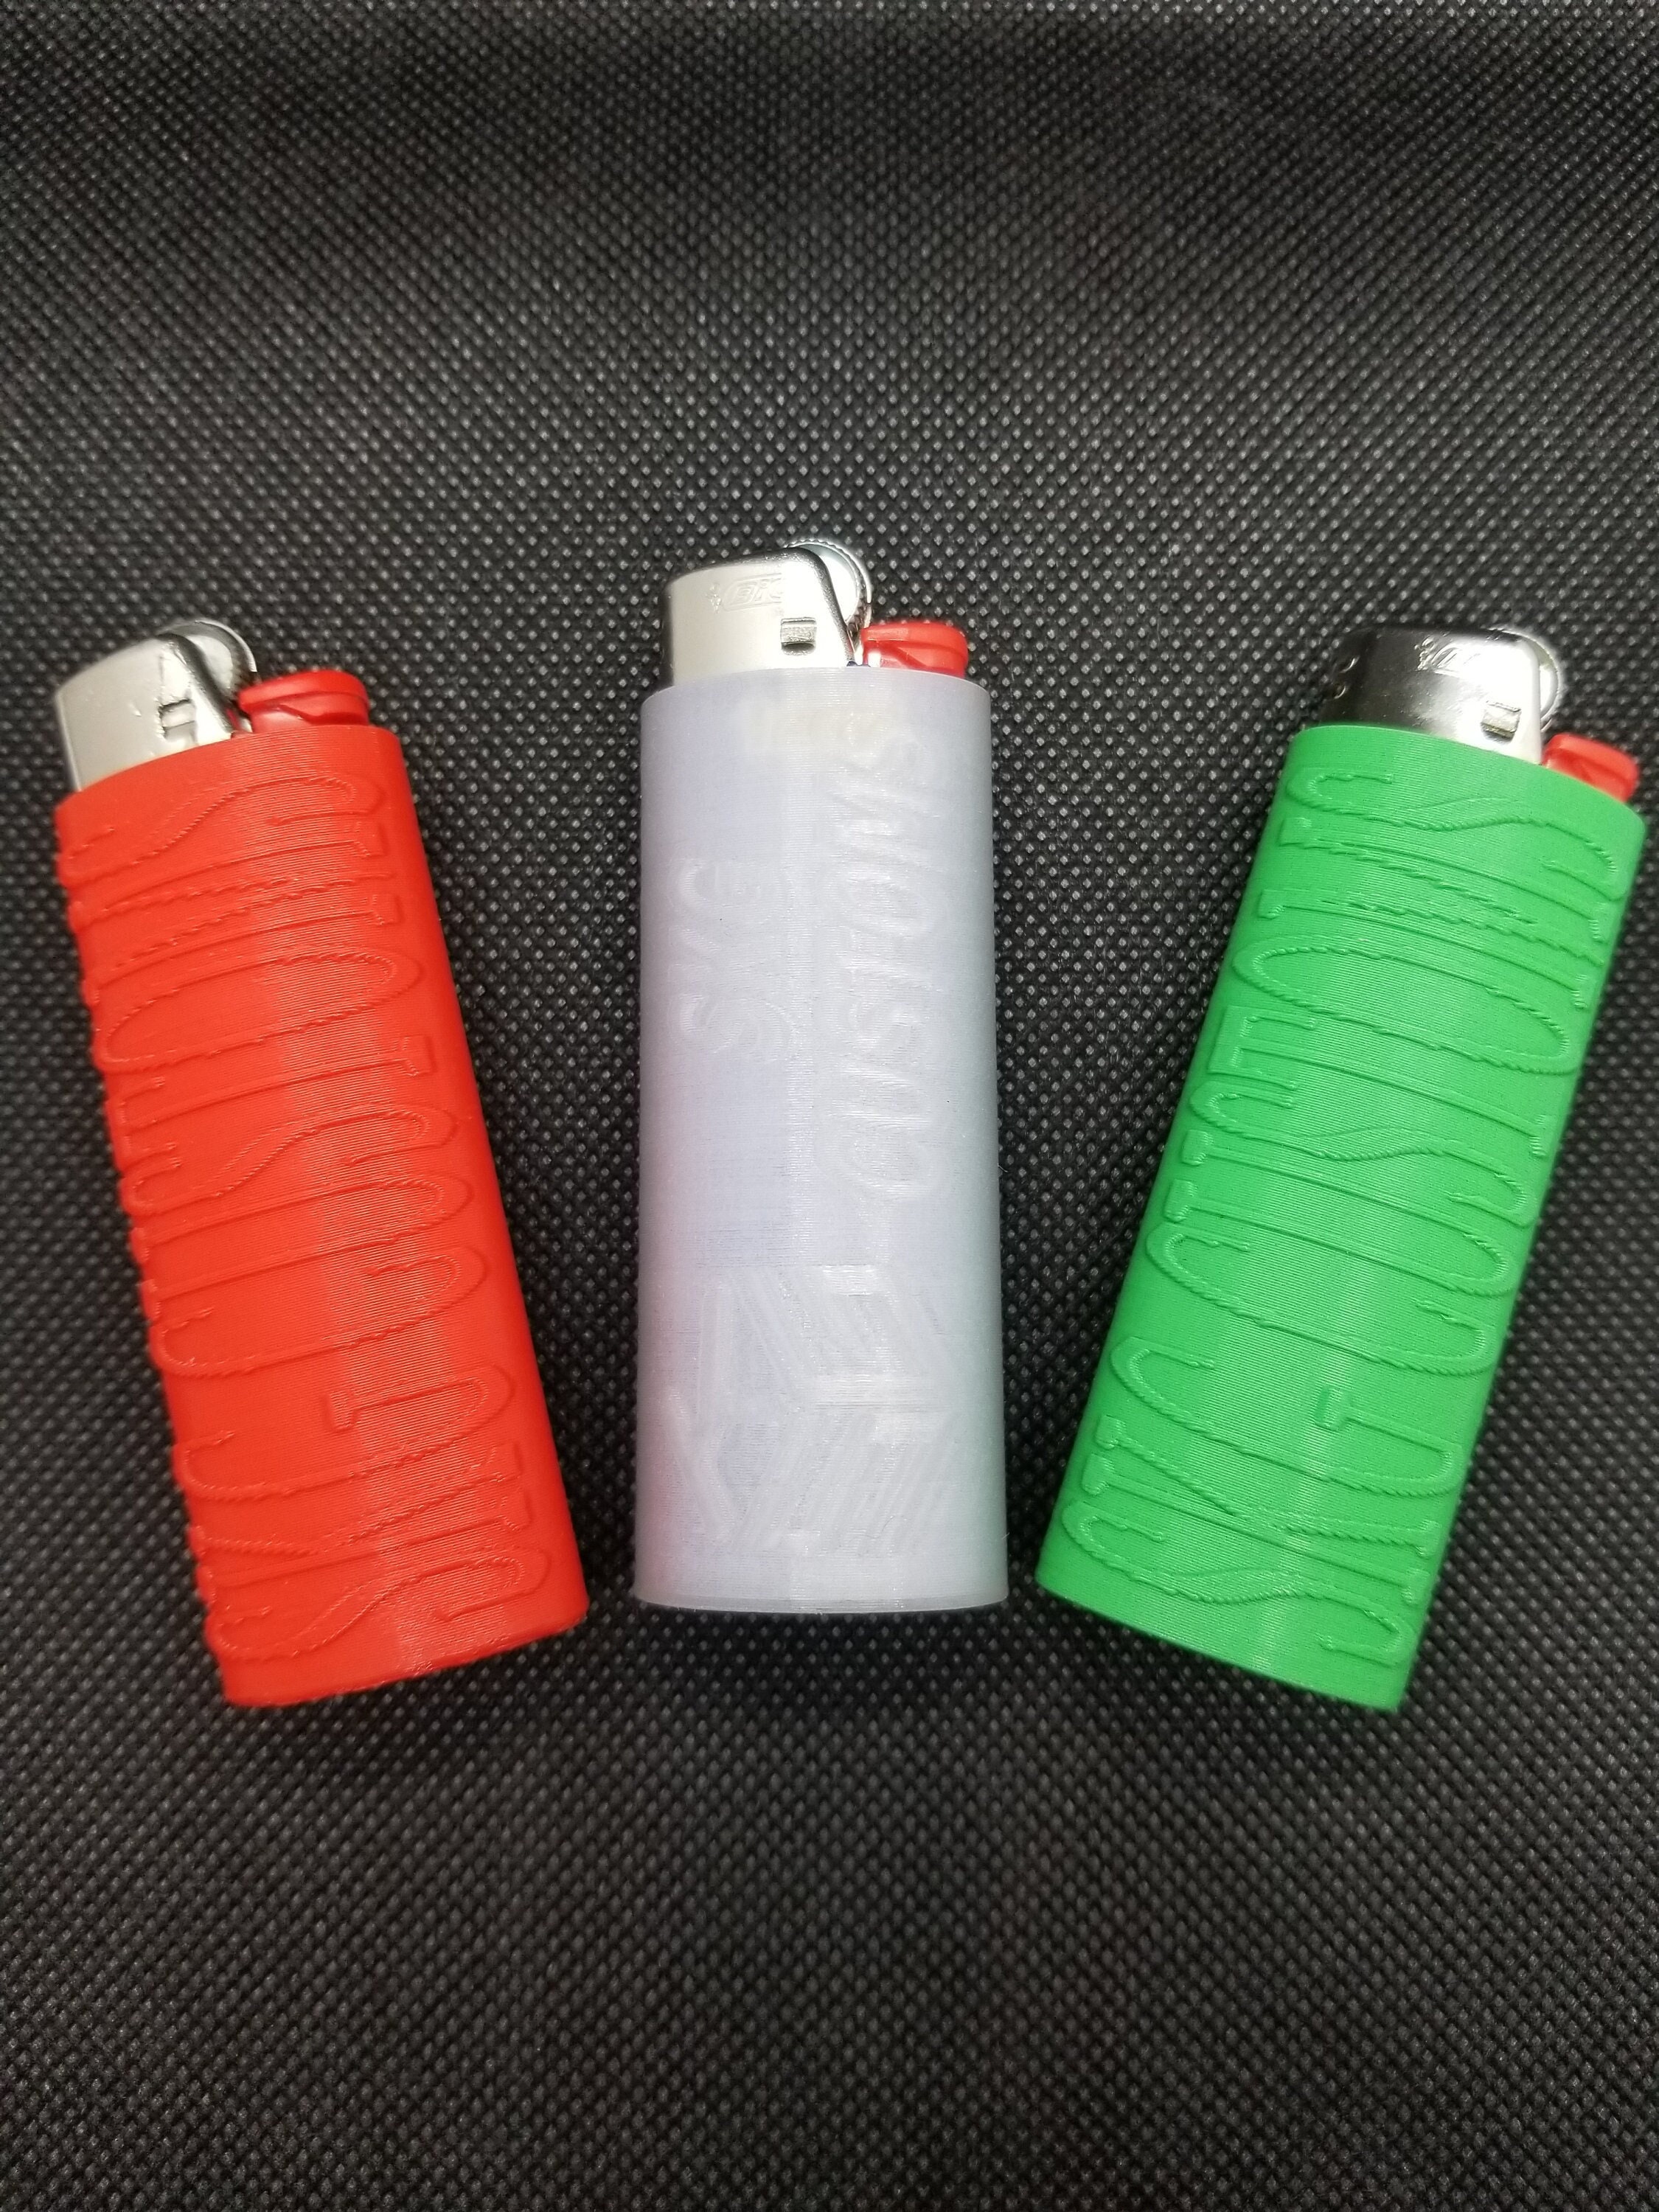 custom bic lighters